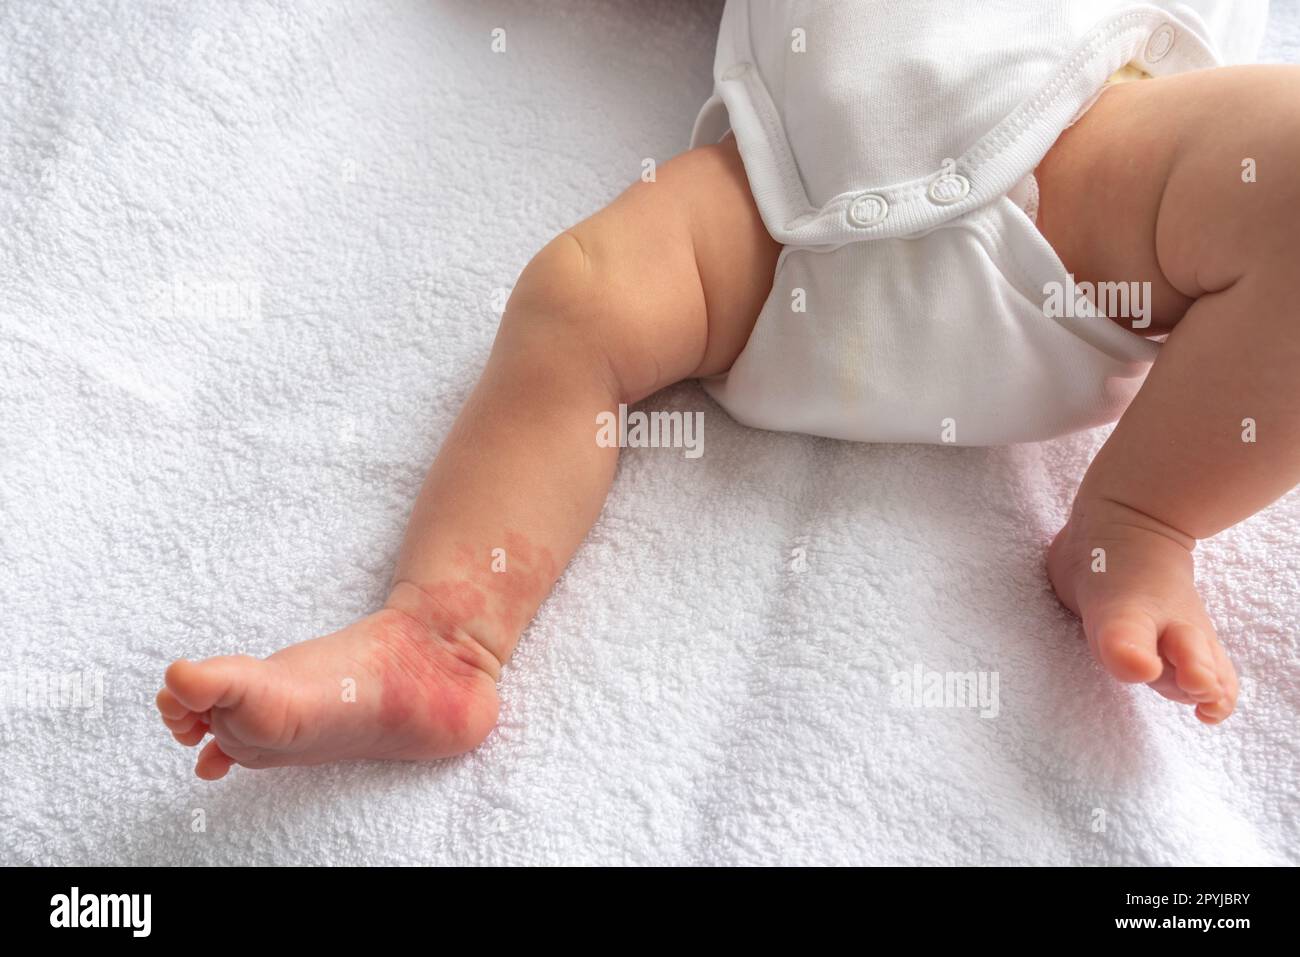 Hemangioma red birthmark on the leg of newborn baby Stock Photo